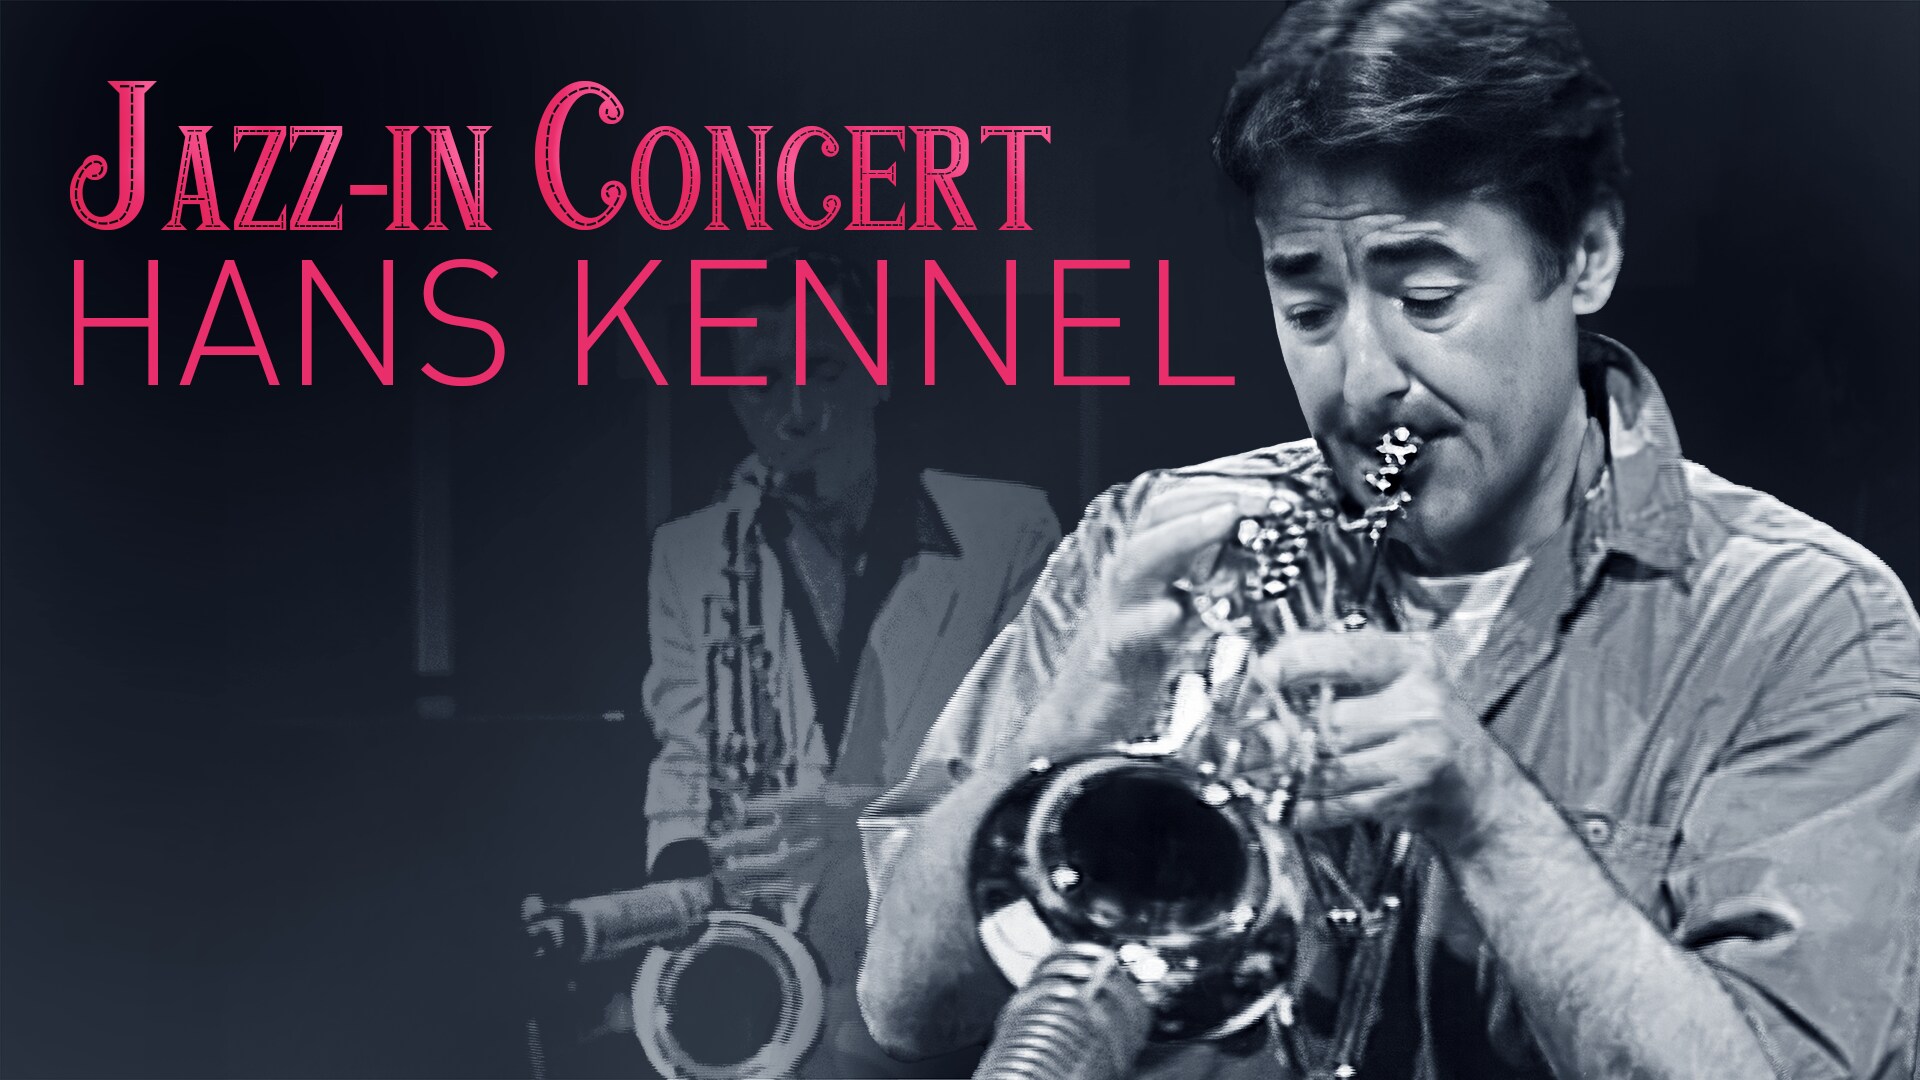 Jazz-in Concert - Hans Kennel